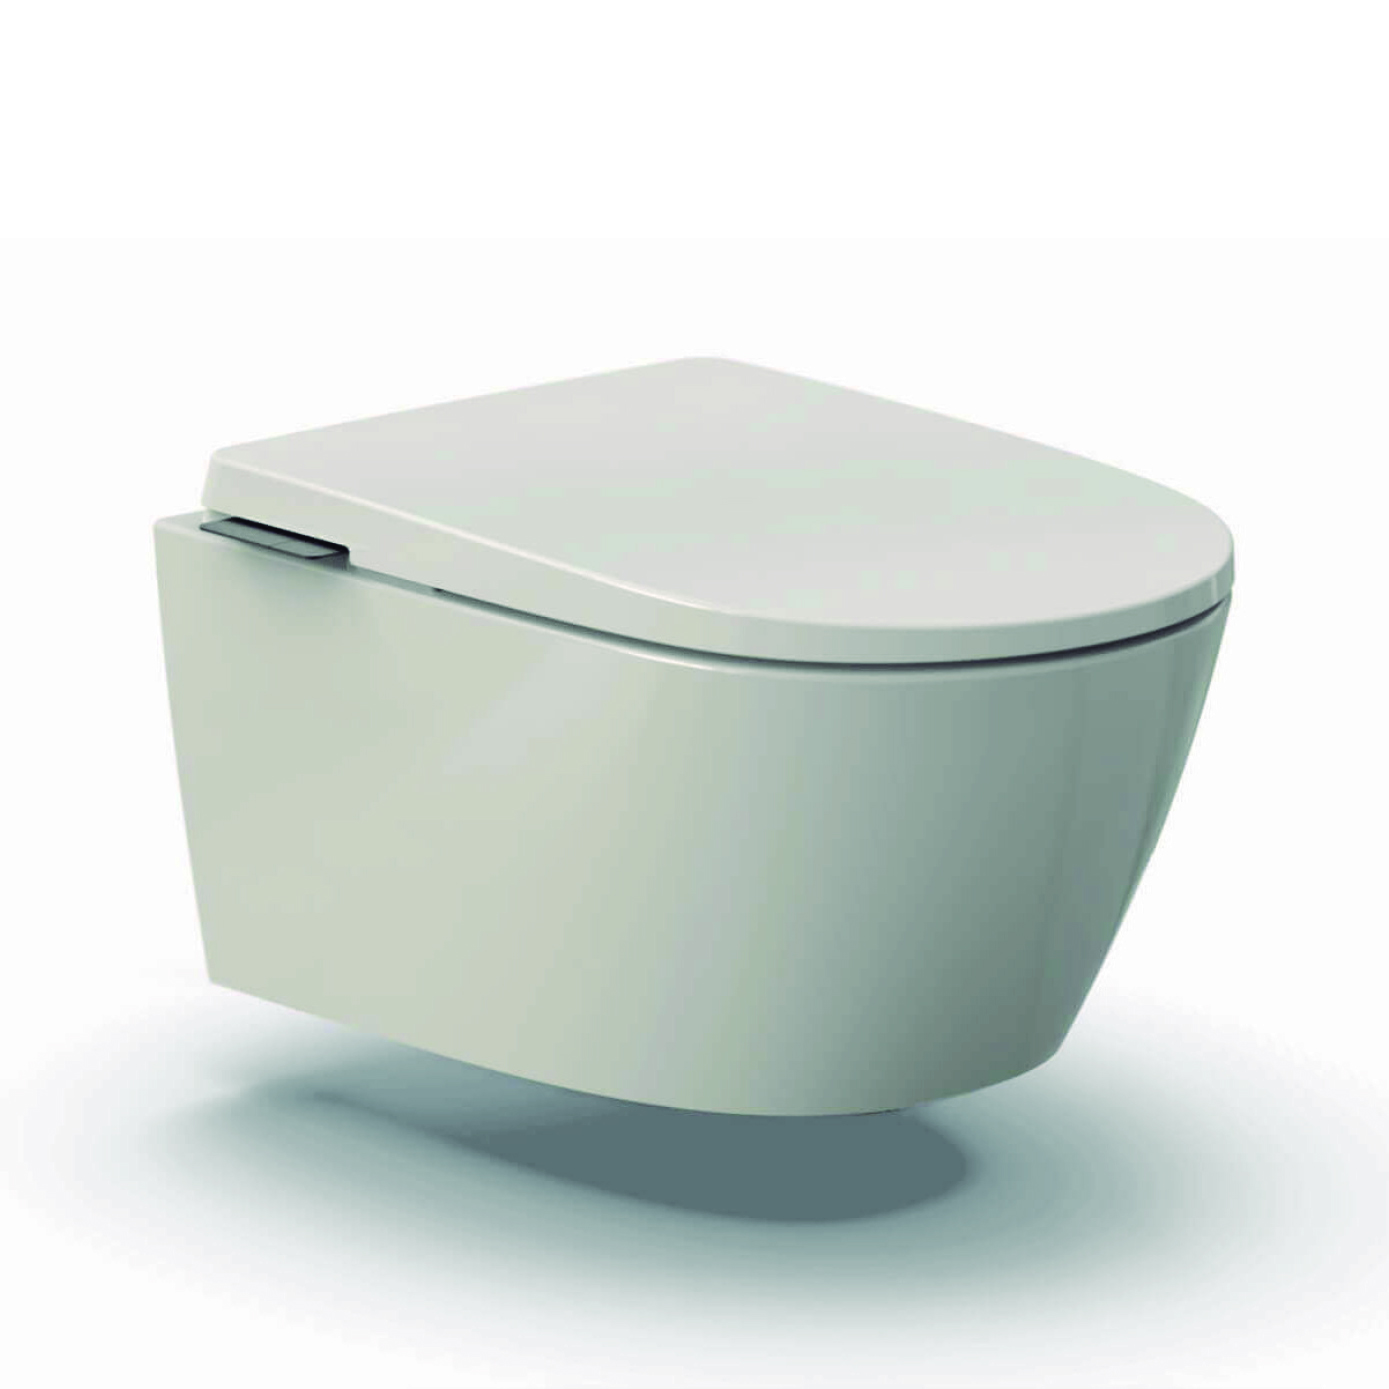 Hydro In-Tank® - WC, Roca Sanitario, S.A. / Co-Innovation mit SIAMP